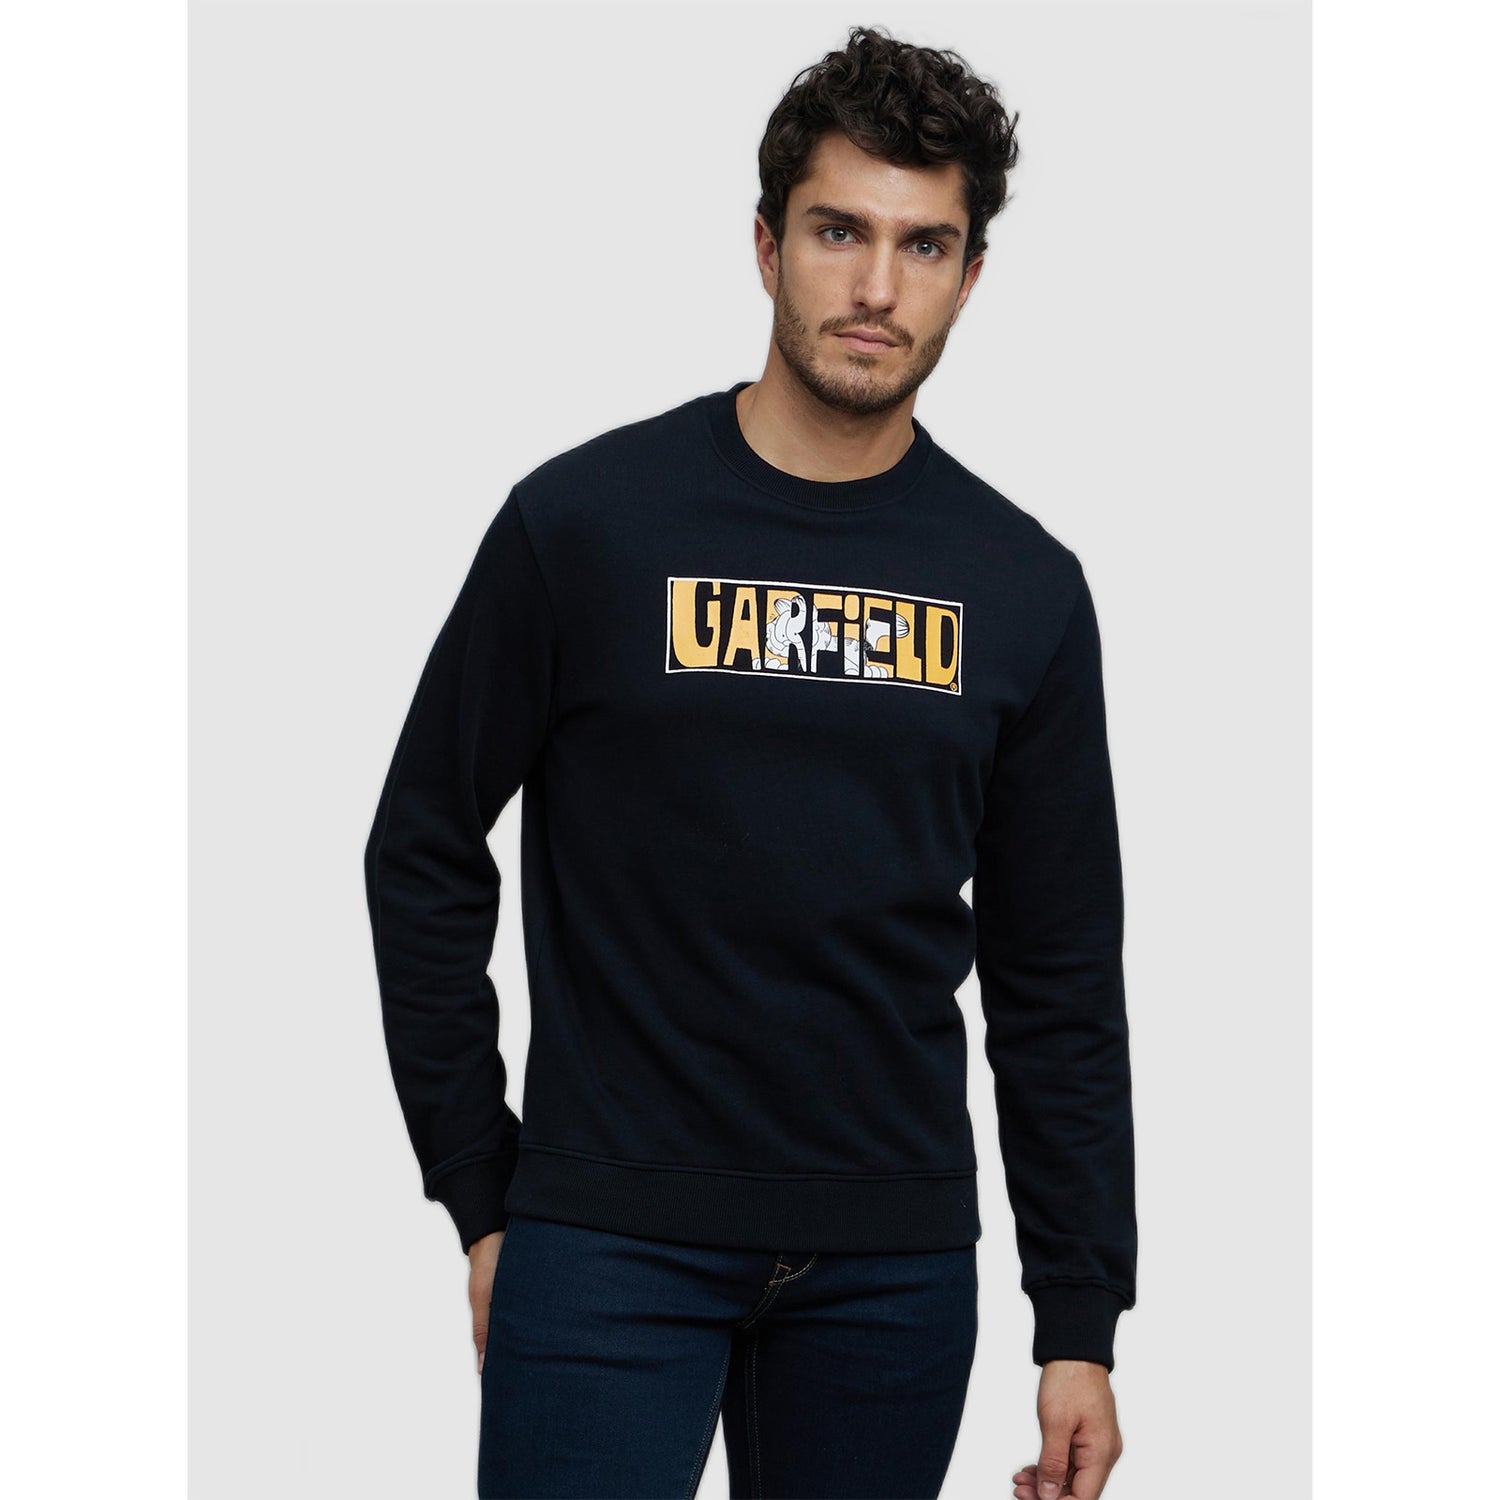 Garfield - Black Printed Cotton Round Neck Sweatshirt (LCEGARFSW1)